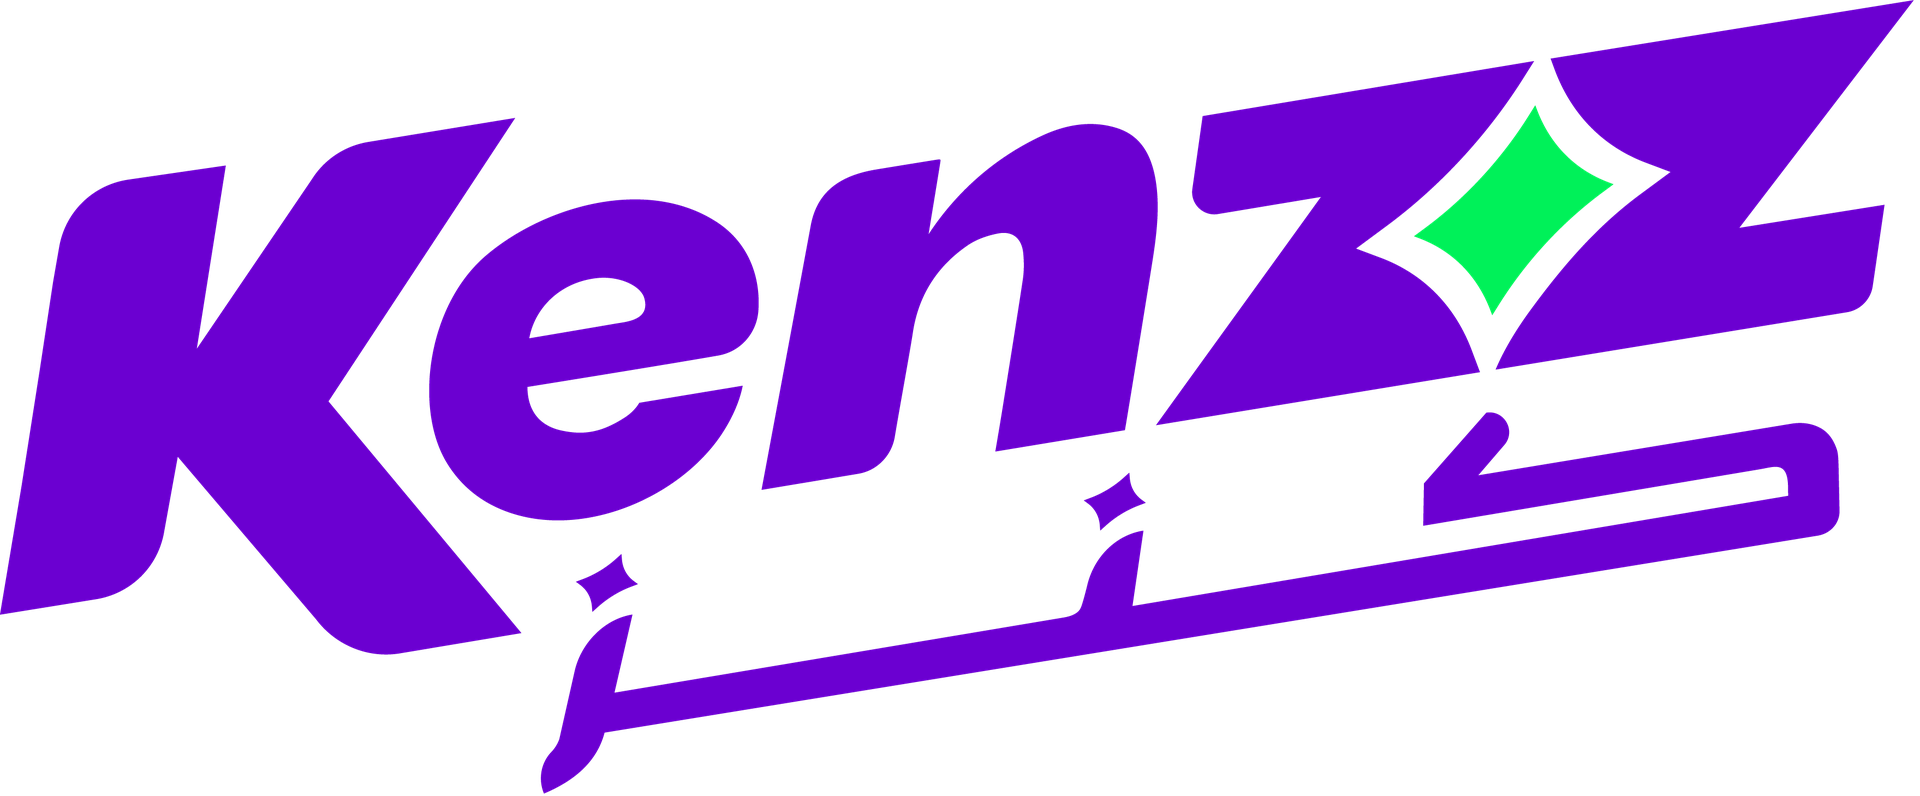 Kenzz